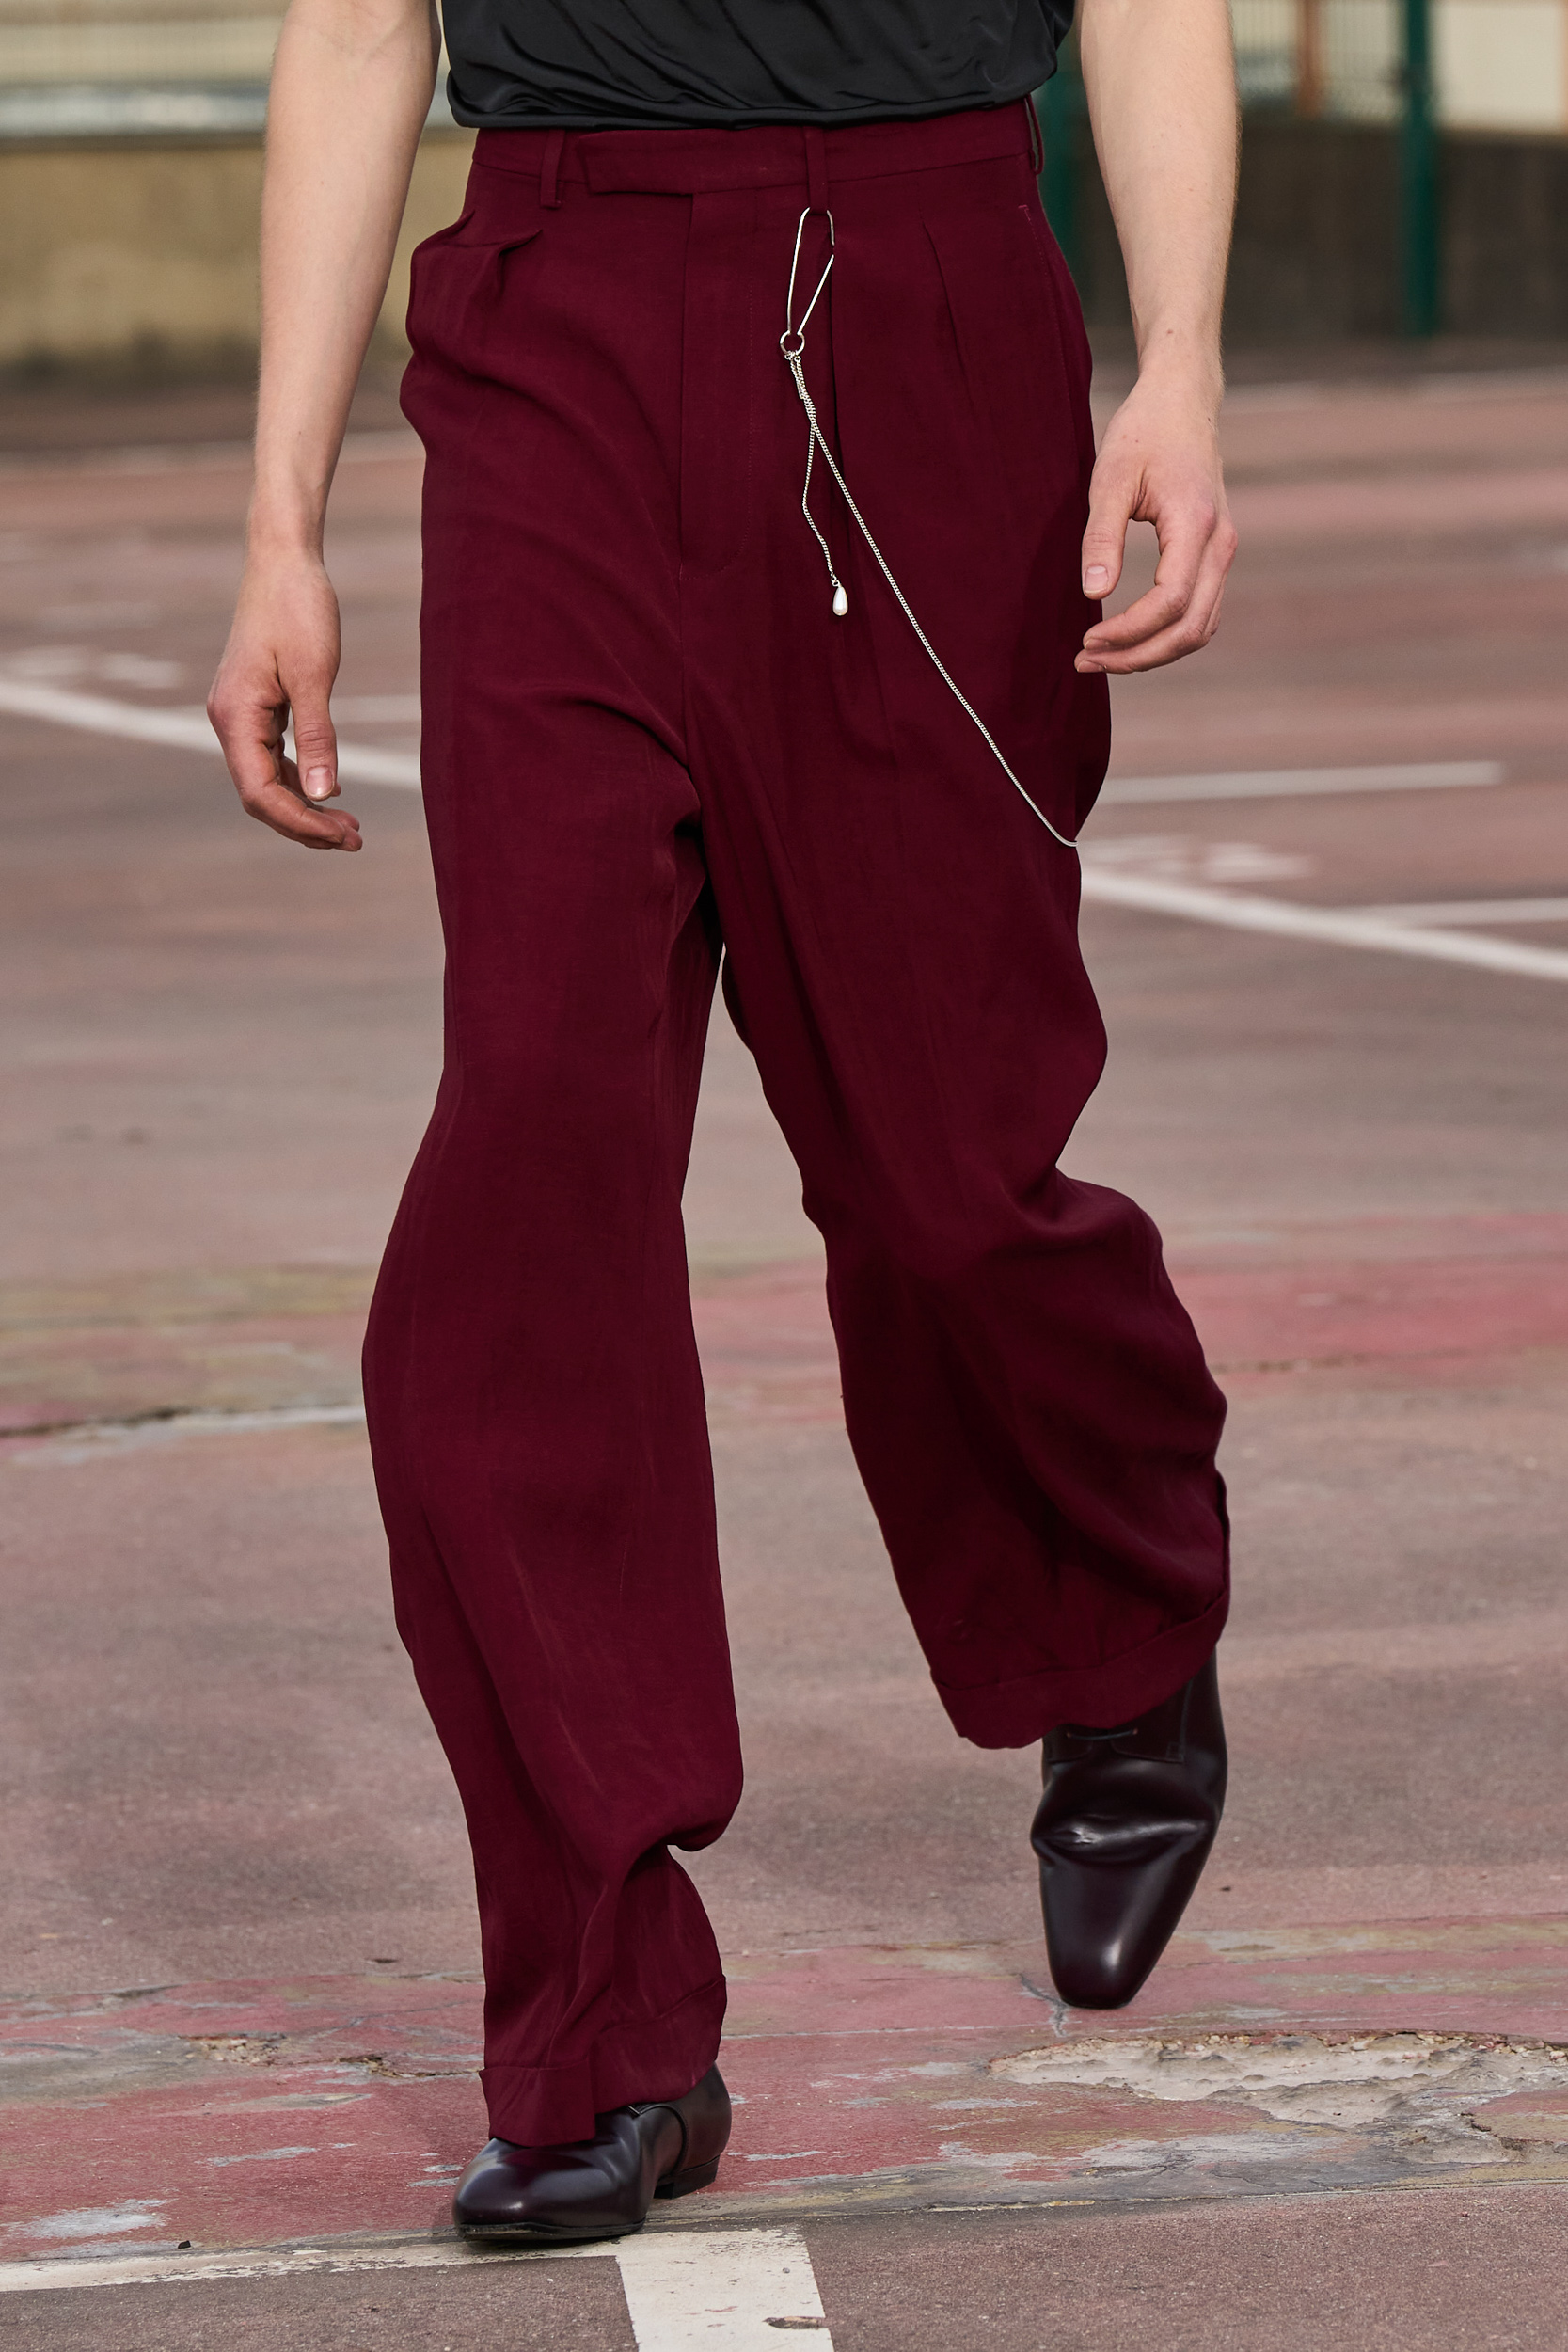 Dries Van Noten Spring 2023 Men's Fashion Show Details Fashion Show